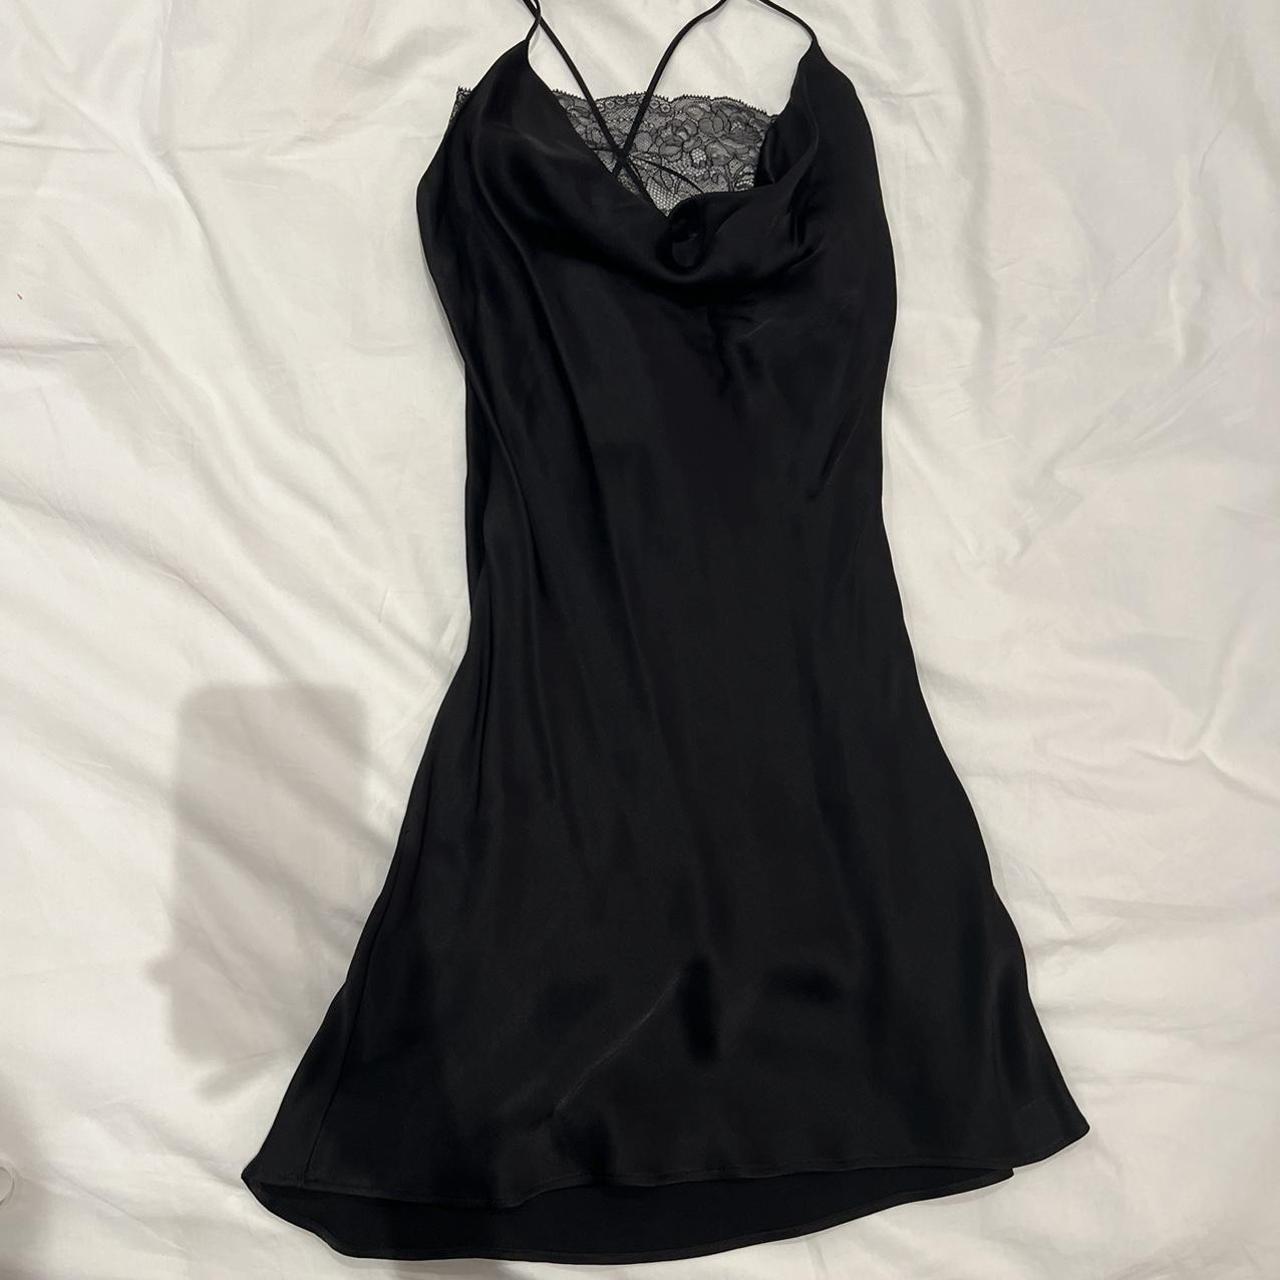 Zara black mini slip dress with lace detail and cute... - Depop